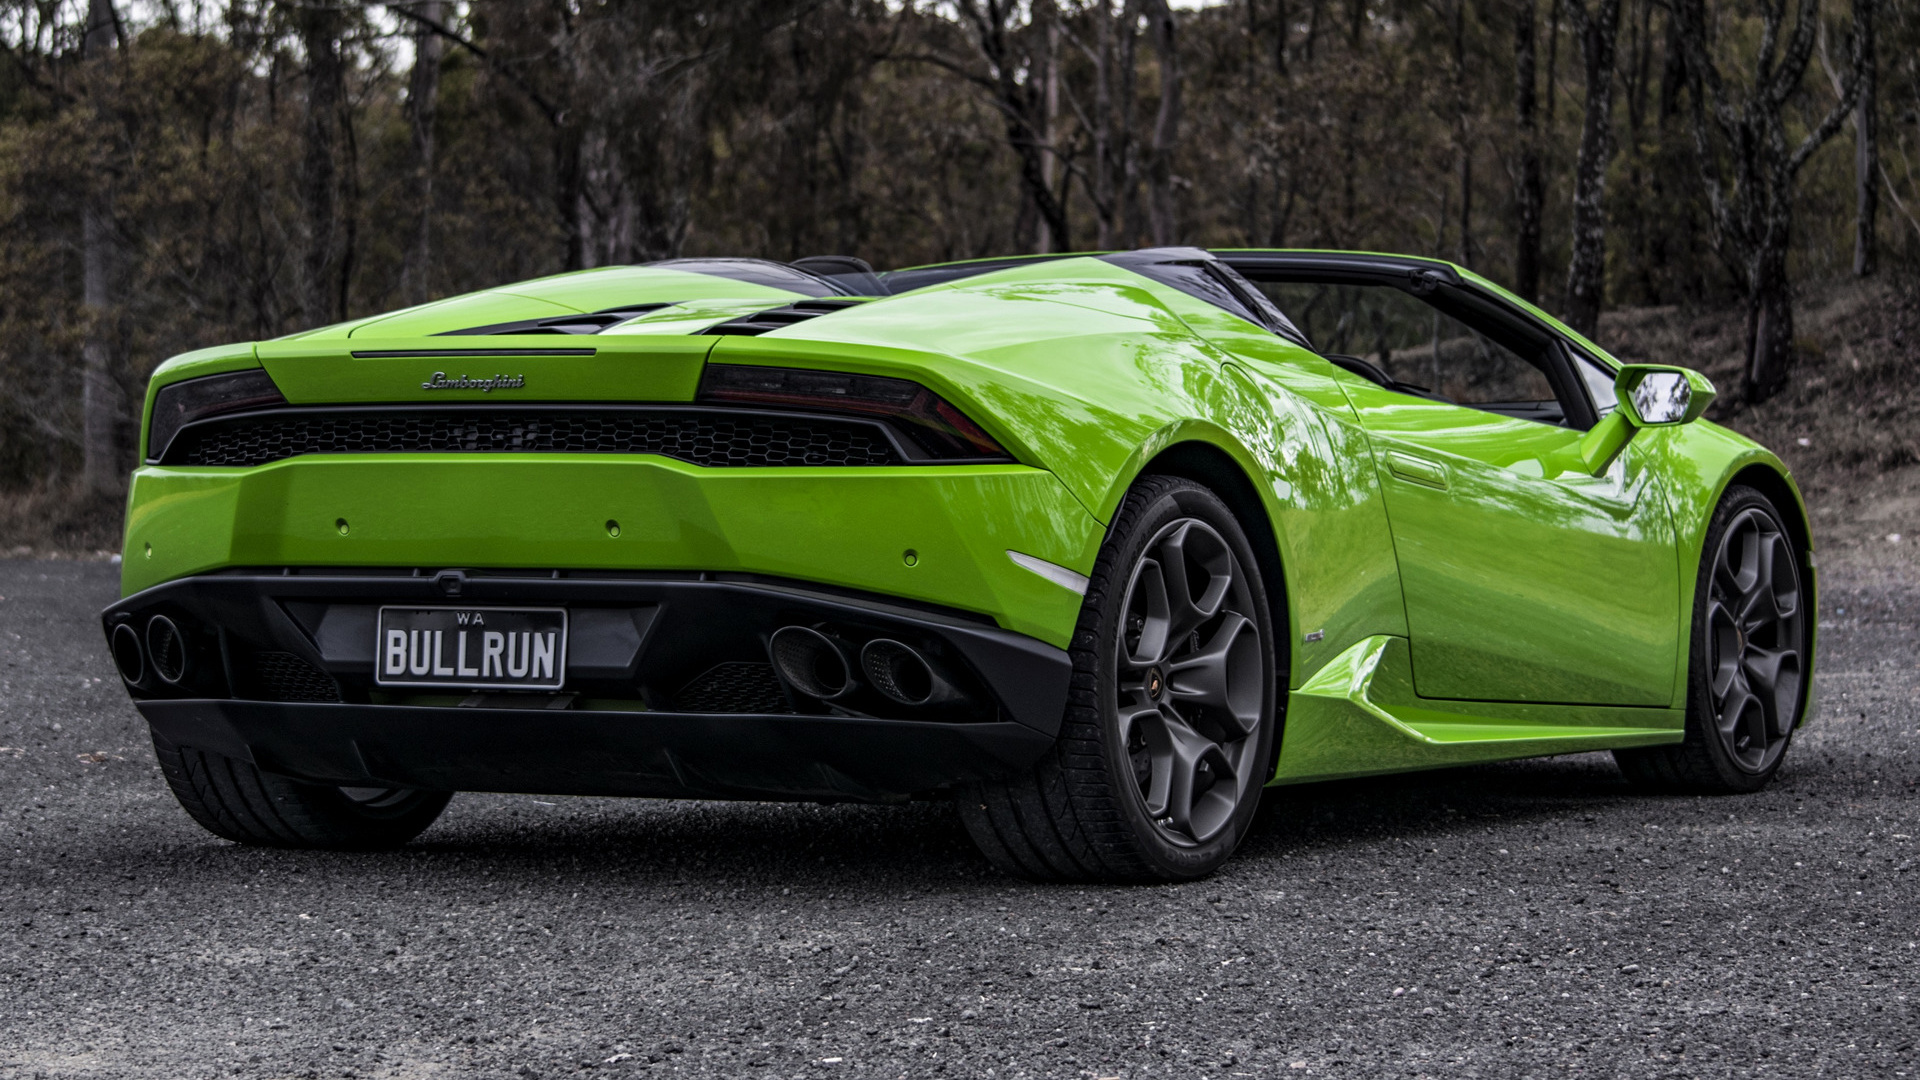 Lamborghini Huracan Wallpapers Images Photos Pictures ...